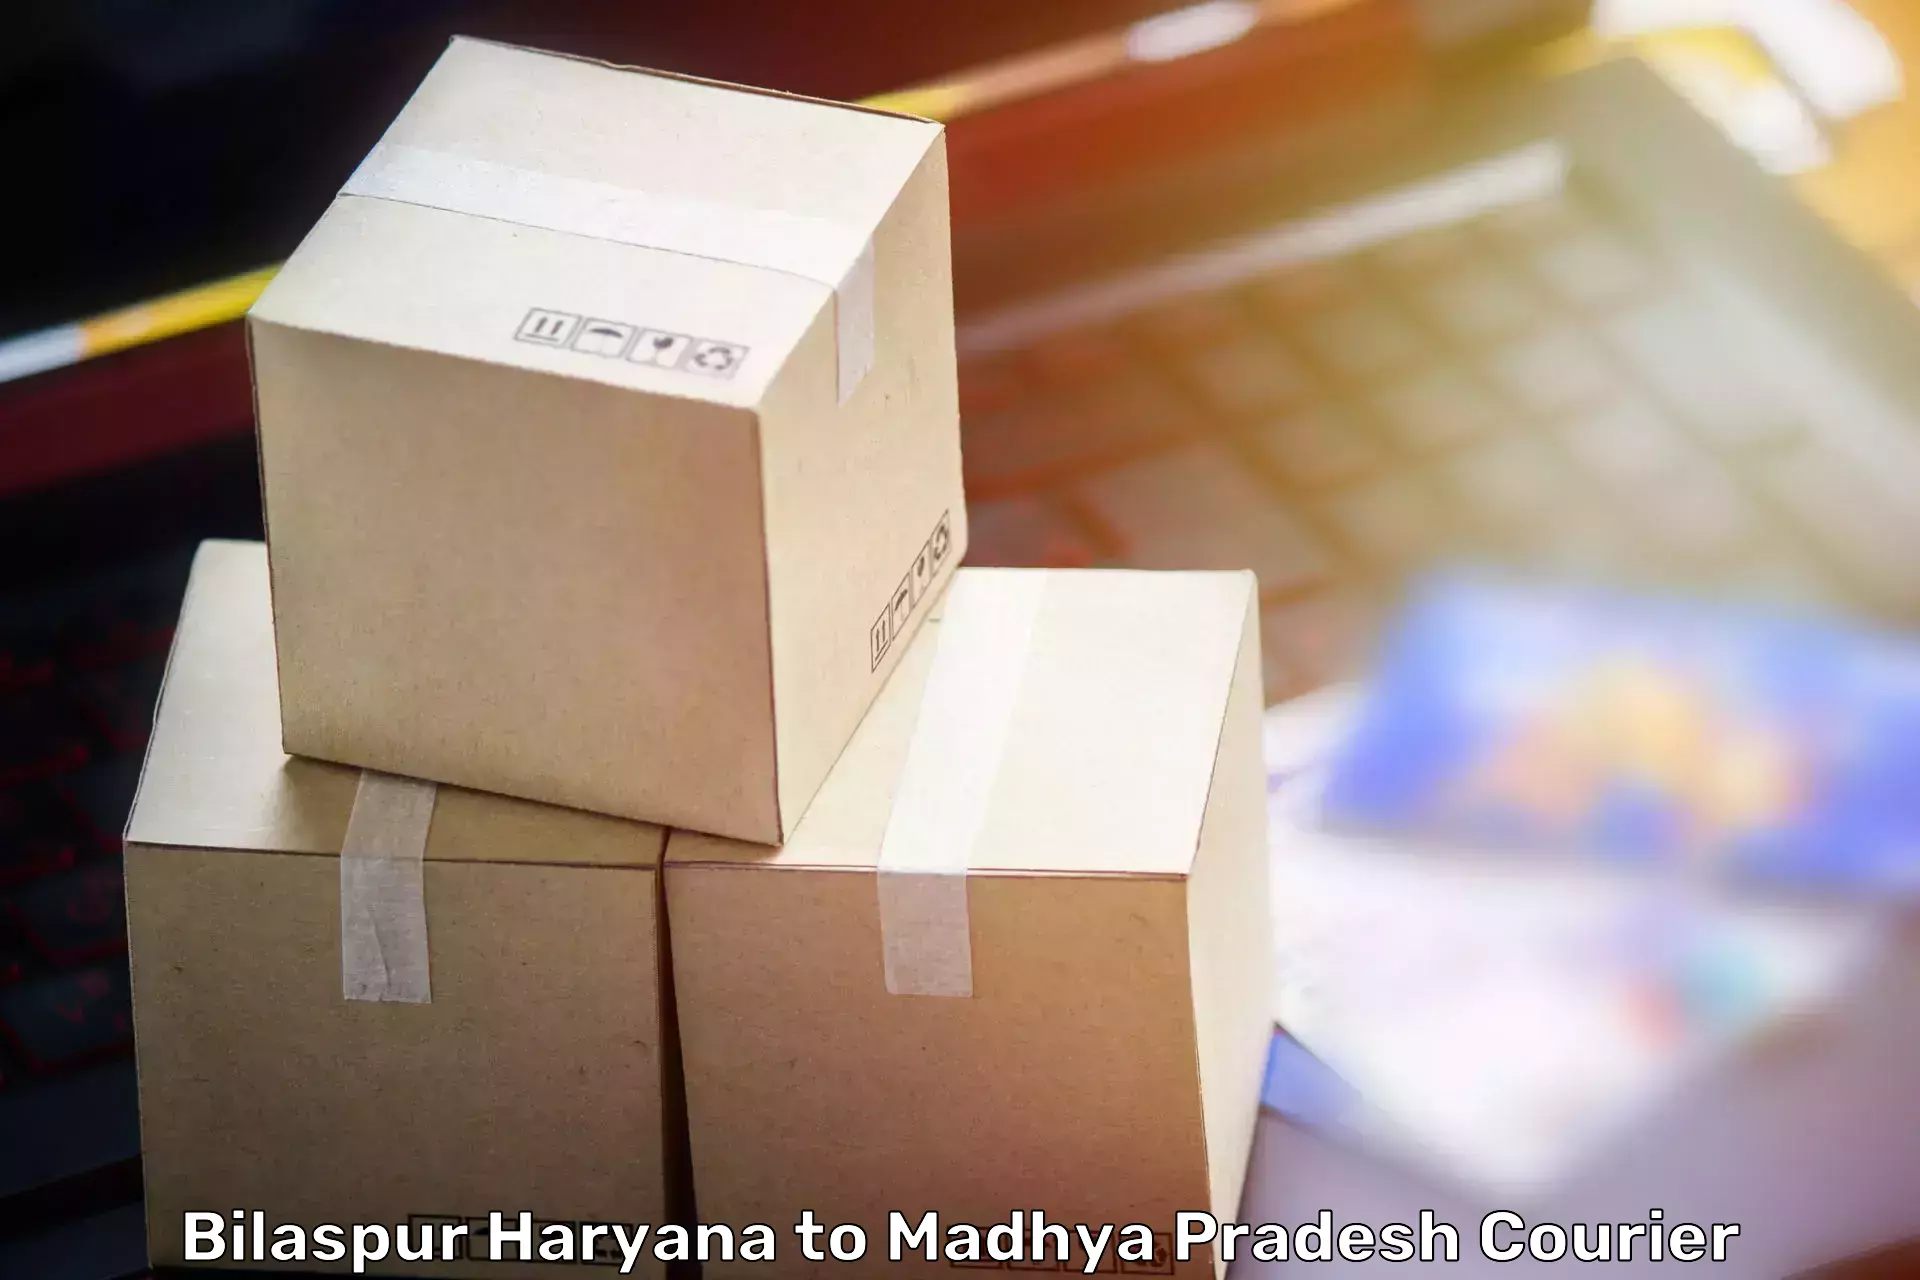 Furniture transport company Bilaspur Haryana to Garoth